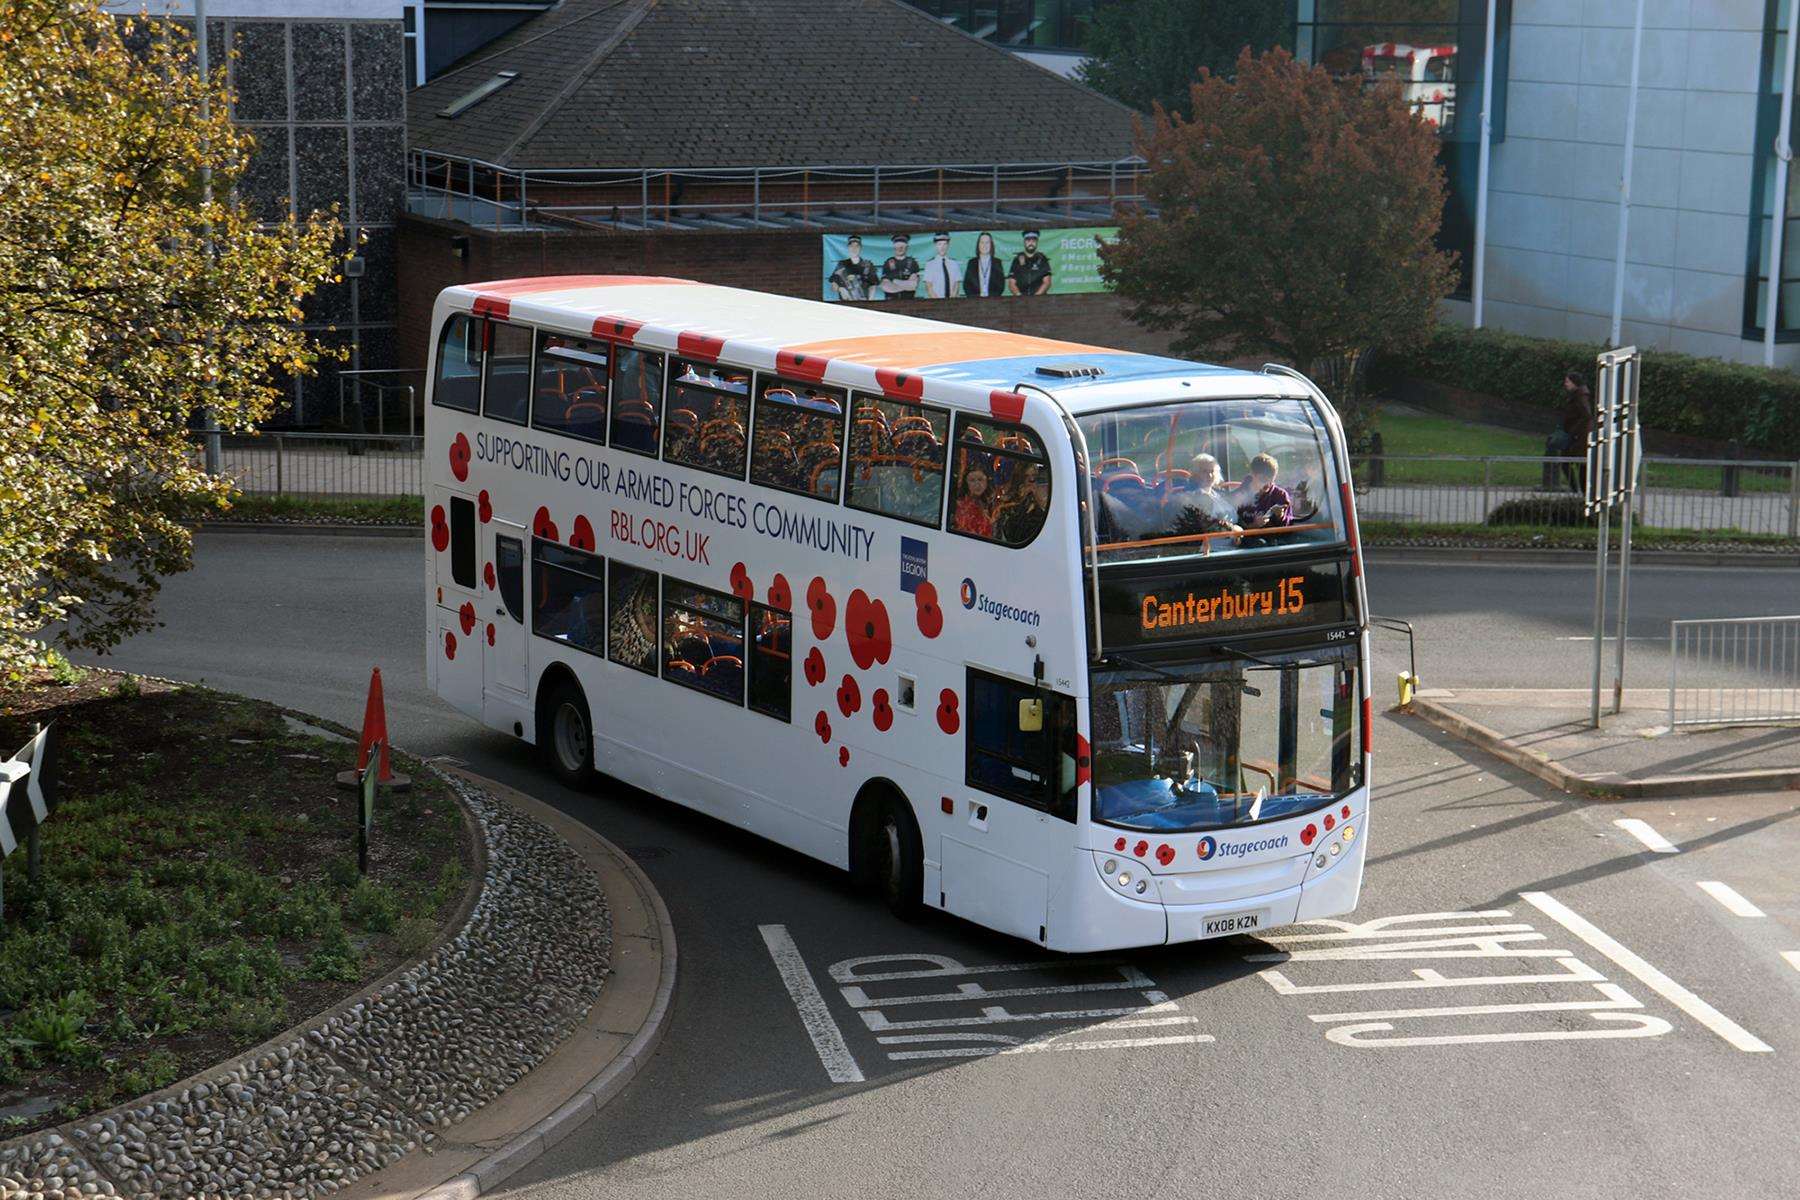 Poppy Bus in service. Picture by Joshua Houselander